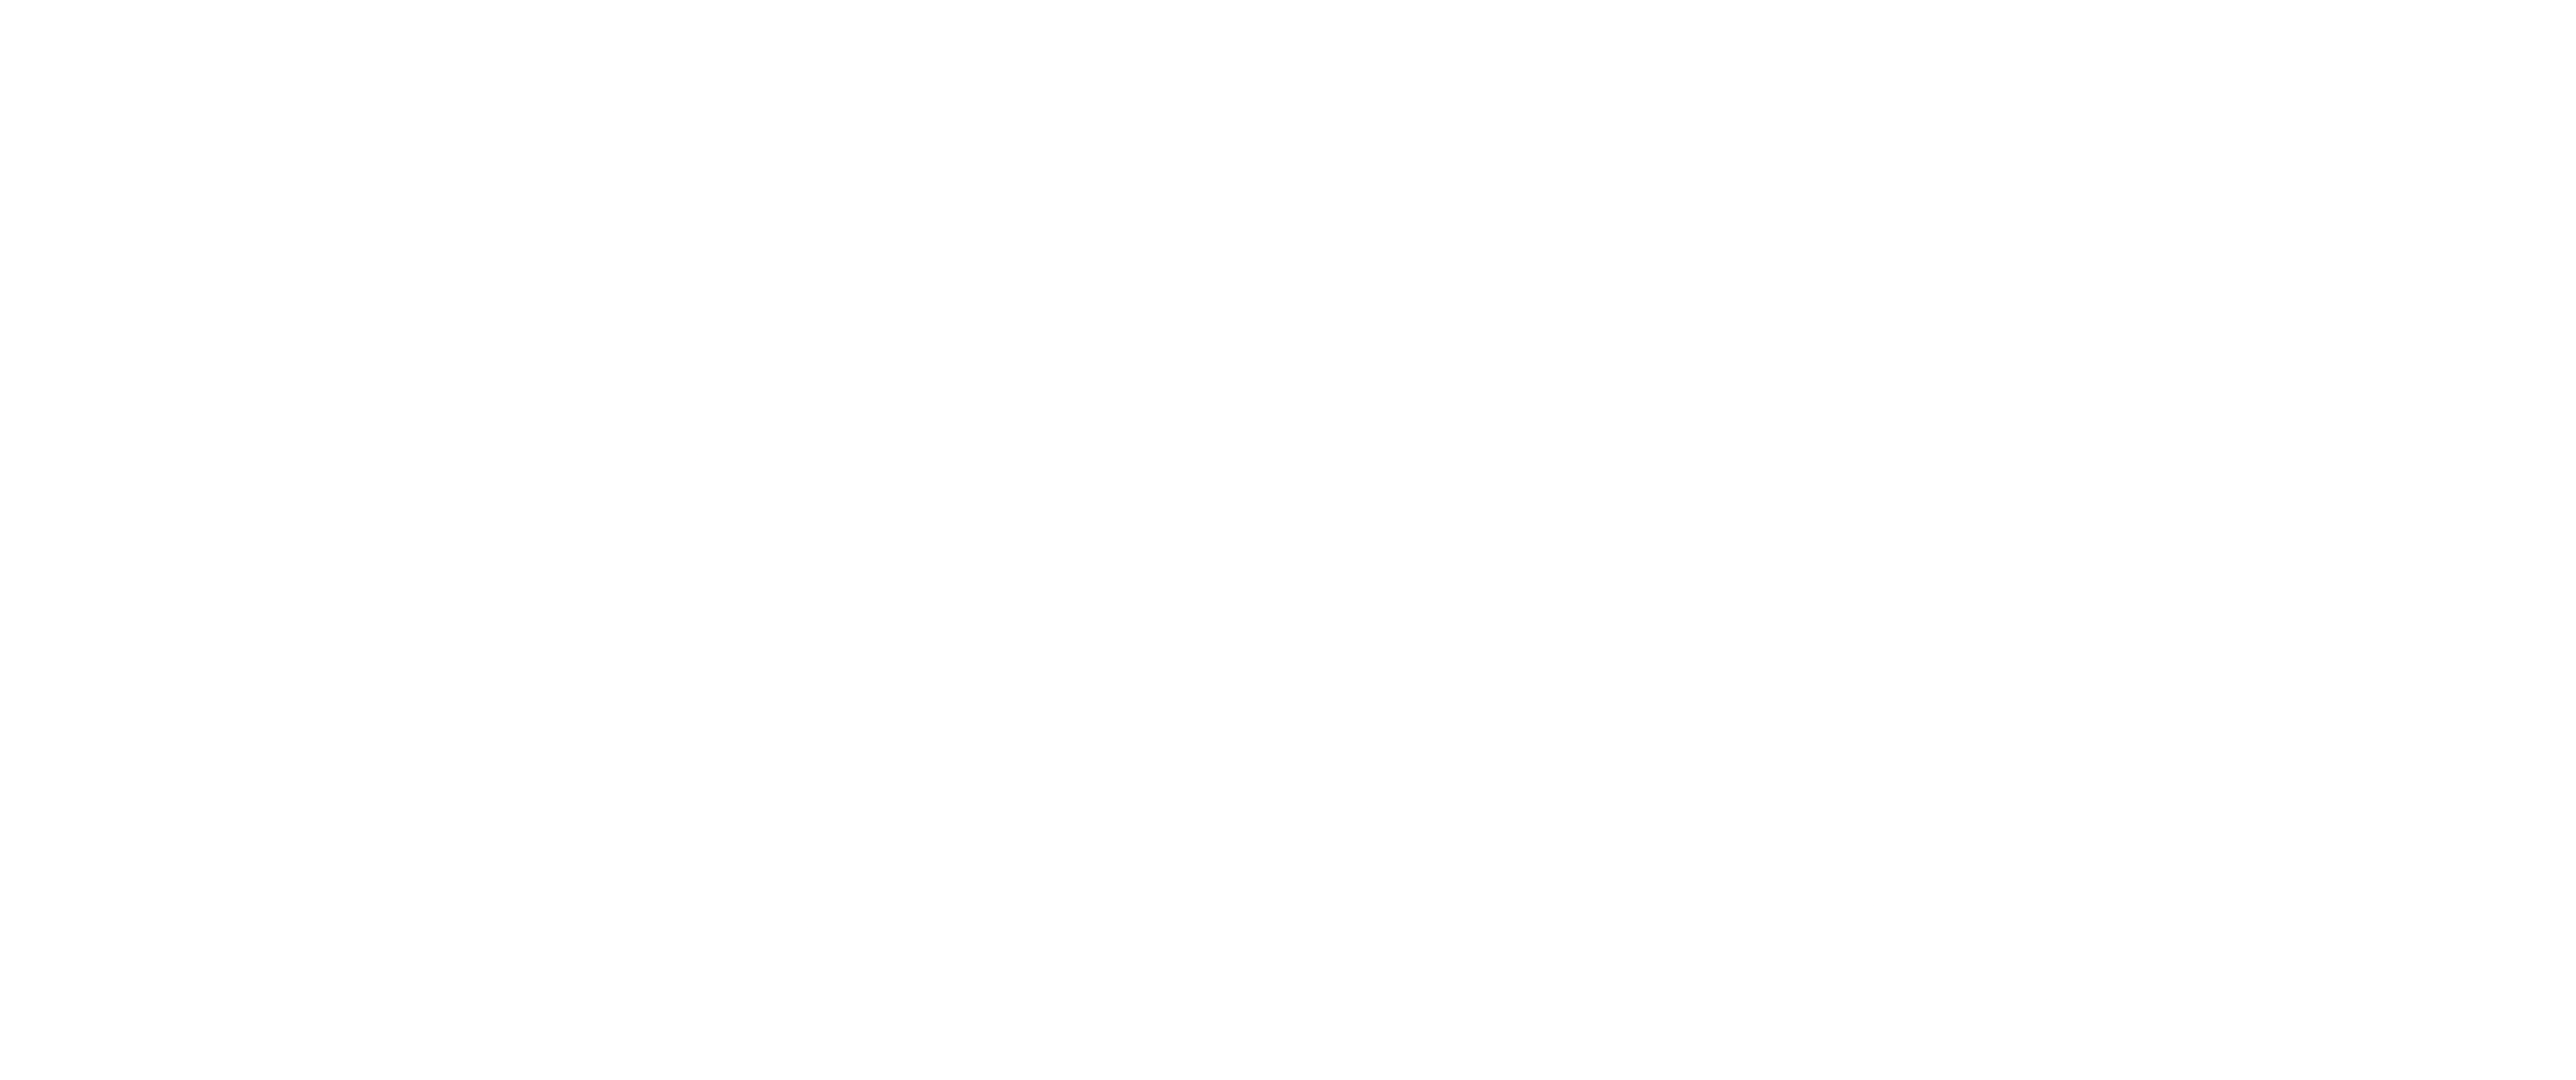 Opinion logo